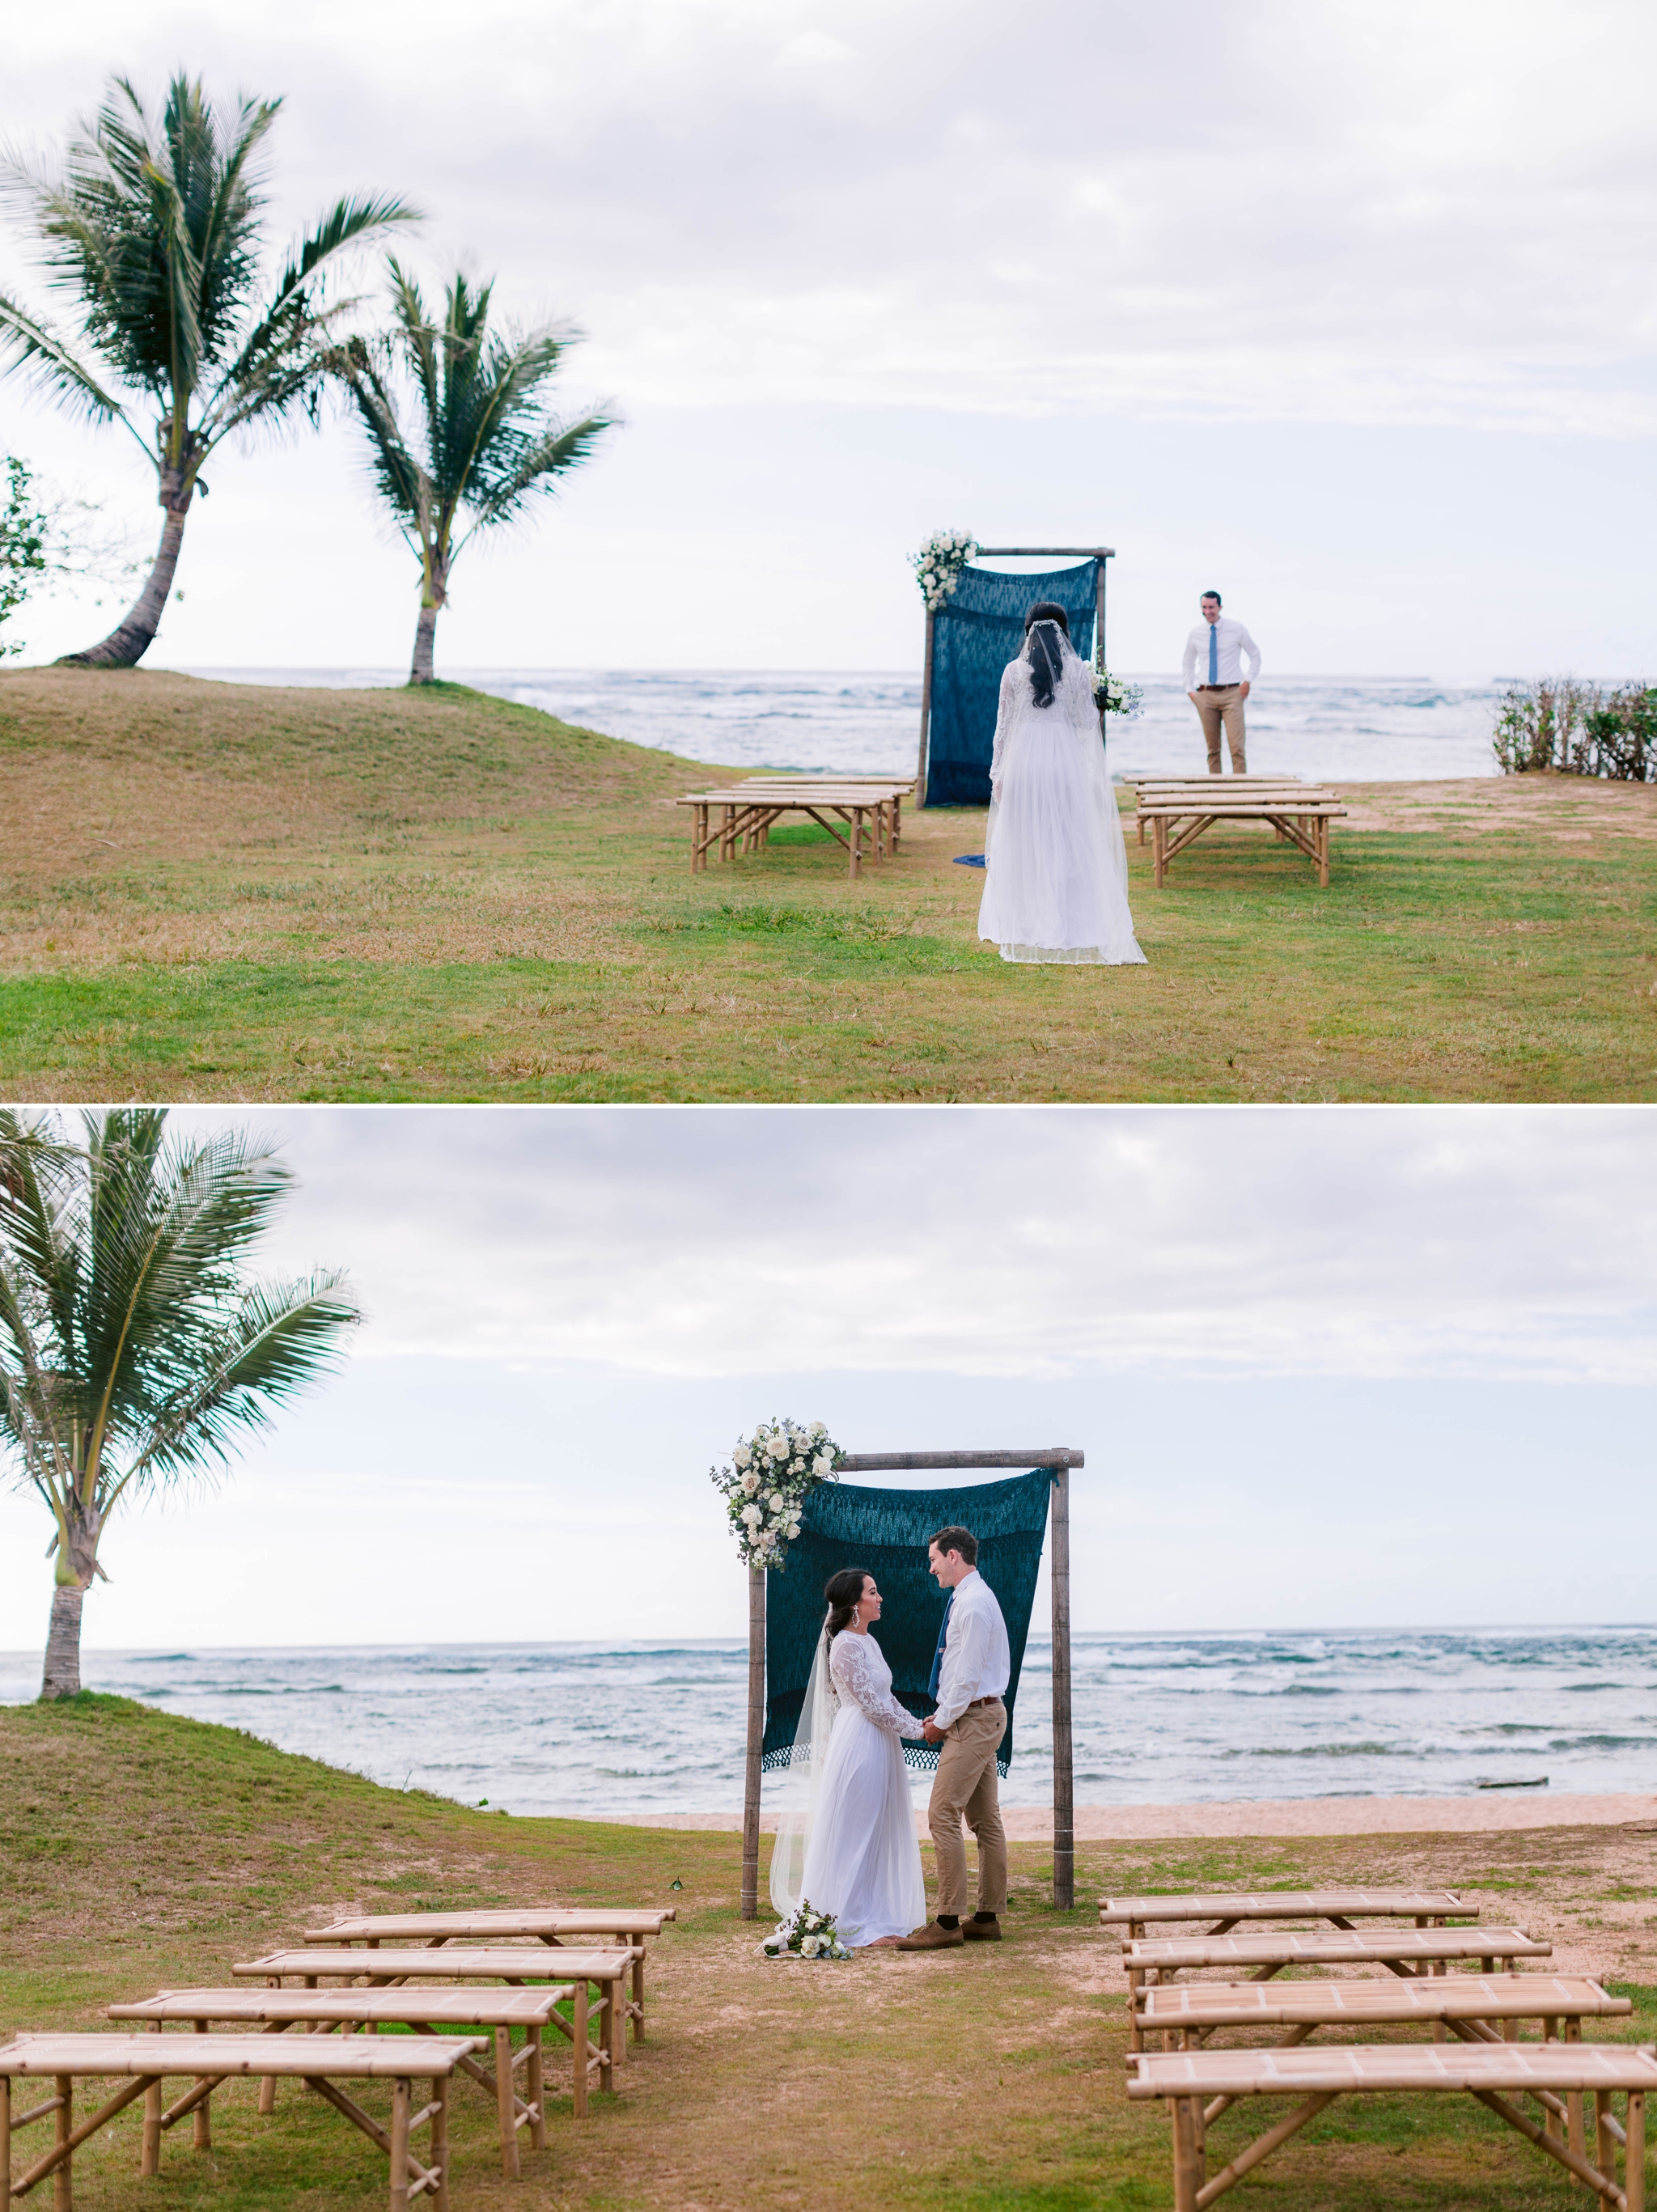 Ceremony at the beach - Ana + Elijah - Wedding at Loulu Palm in Haleiwa, HI - Oahu Hawaii Wedding Photographer 